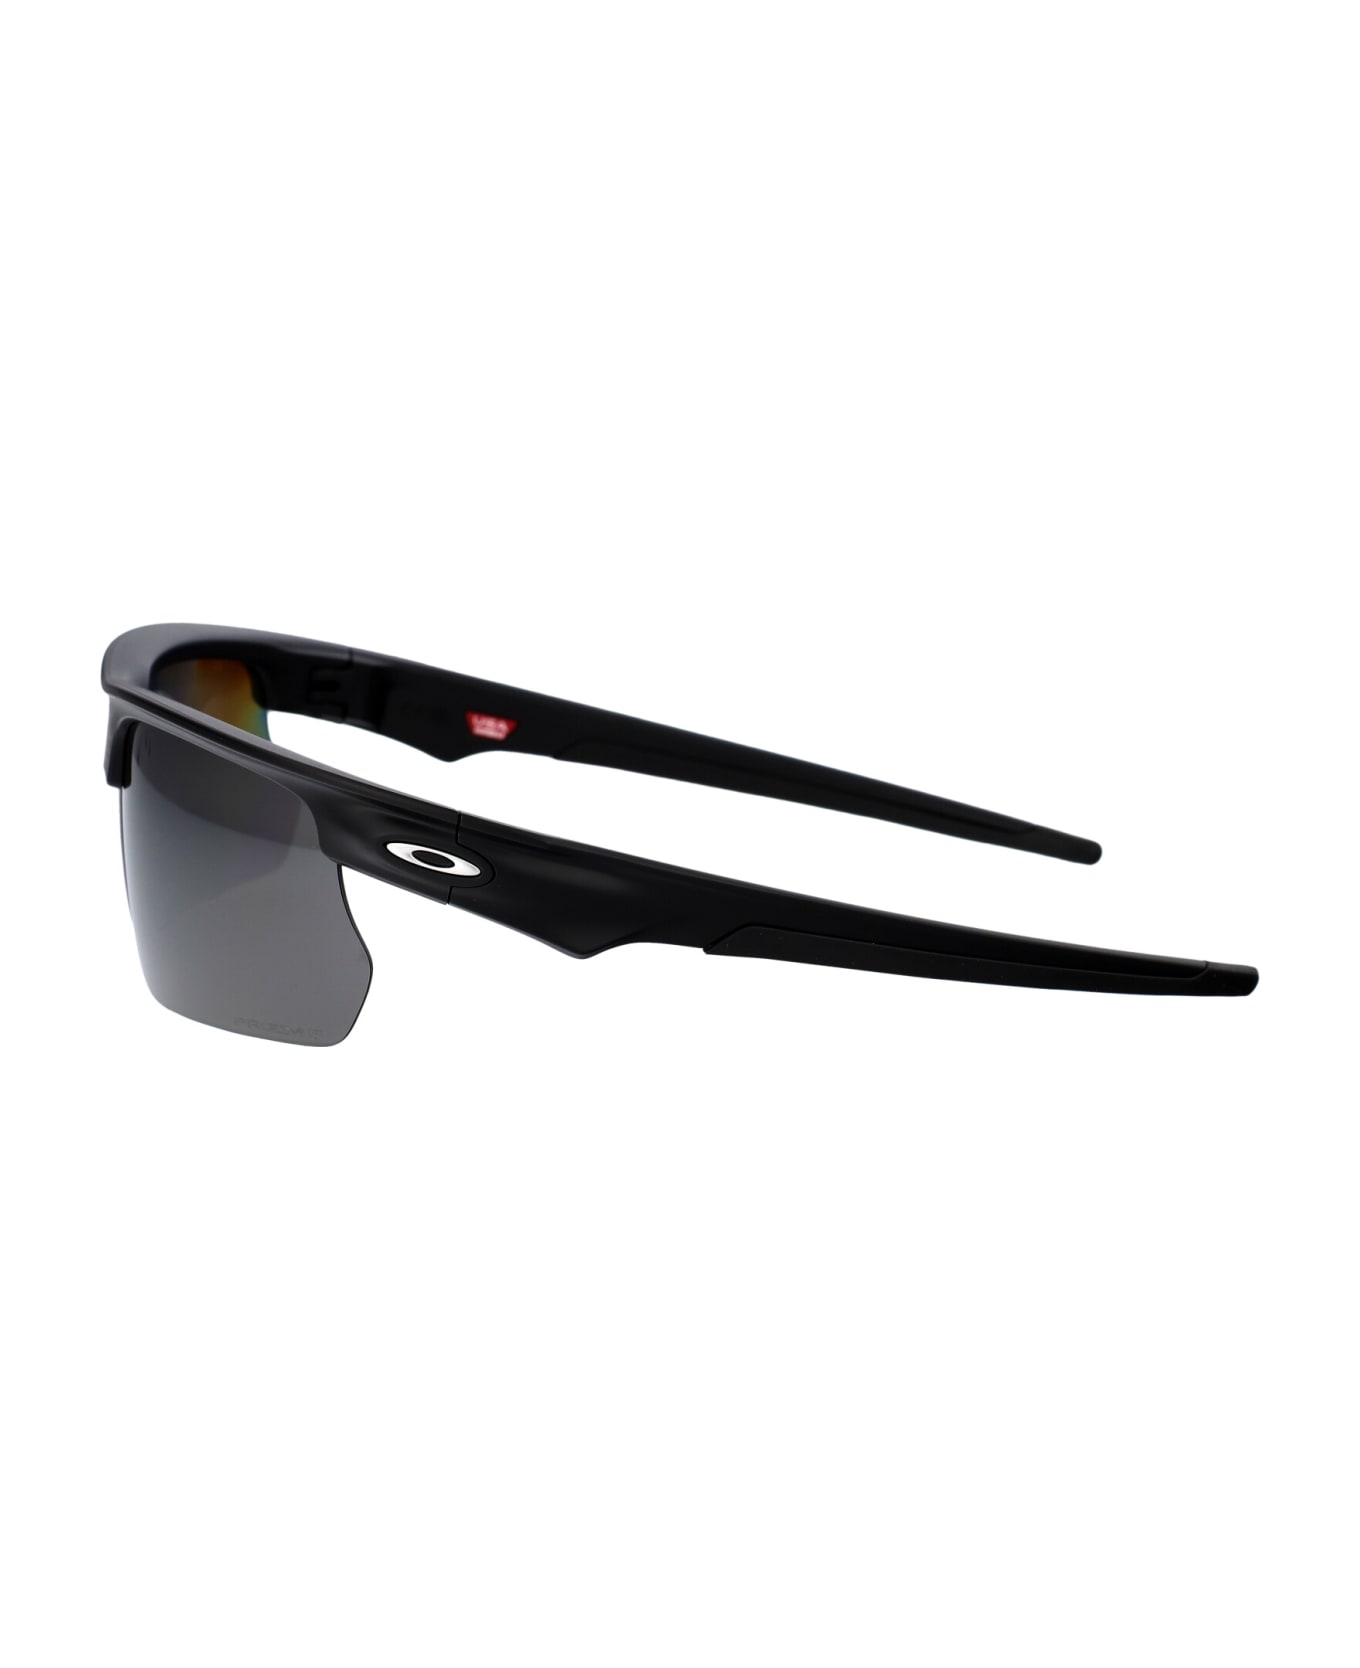 Oakley Bisphaera Sunglasses - 940002 Steel